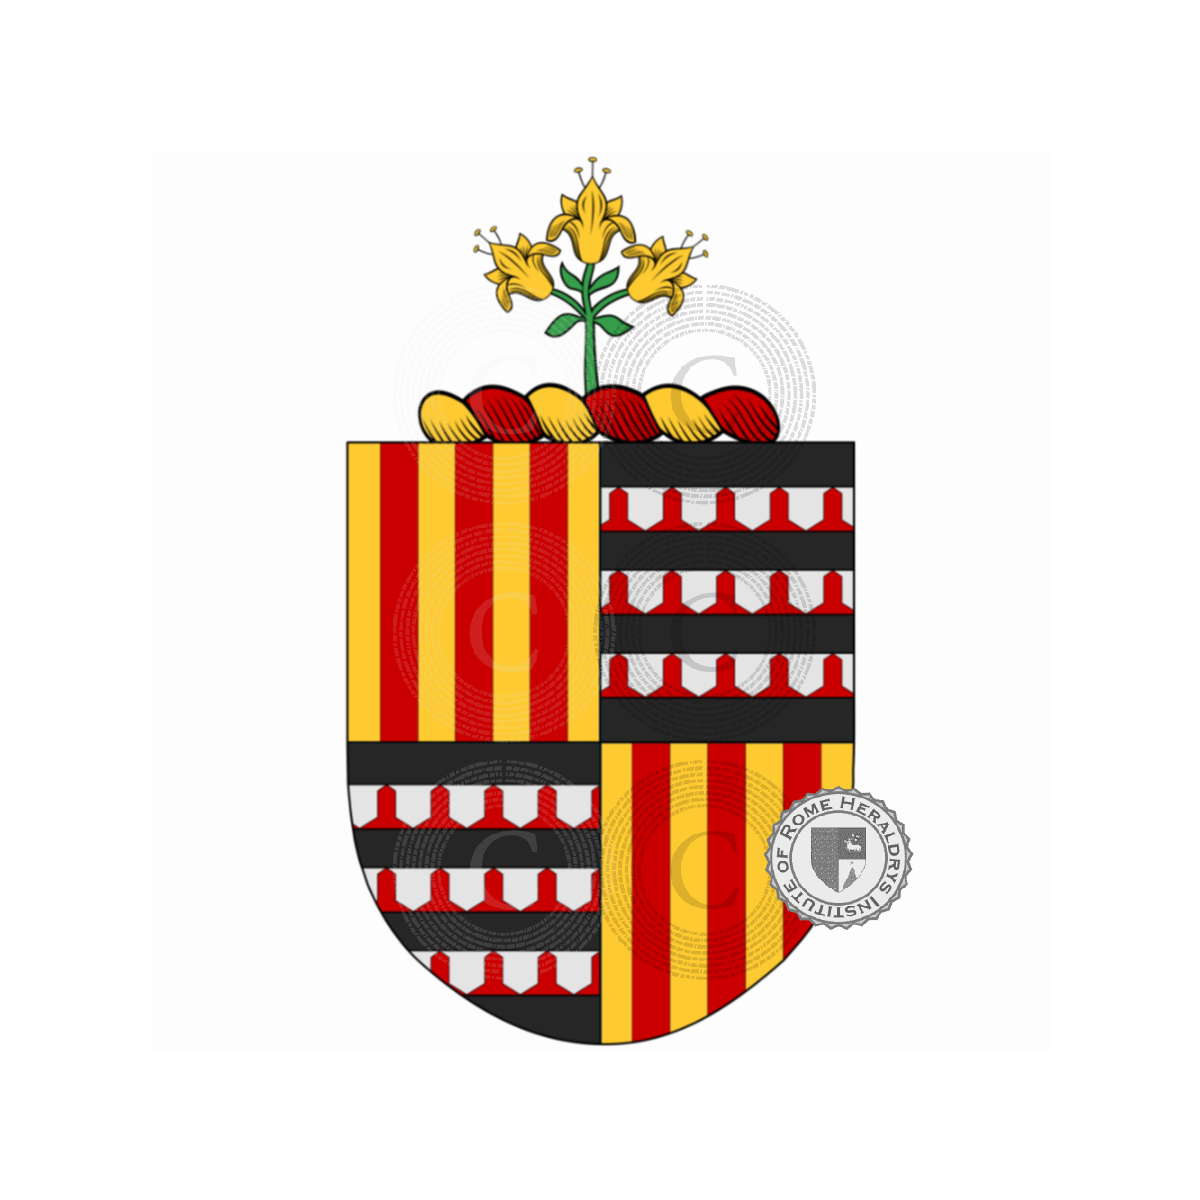 Coat of arms of familyRibeiro